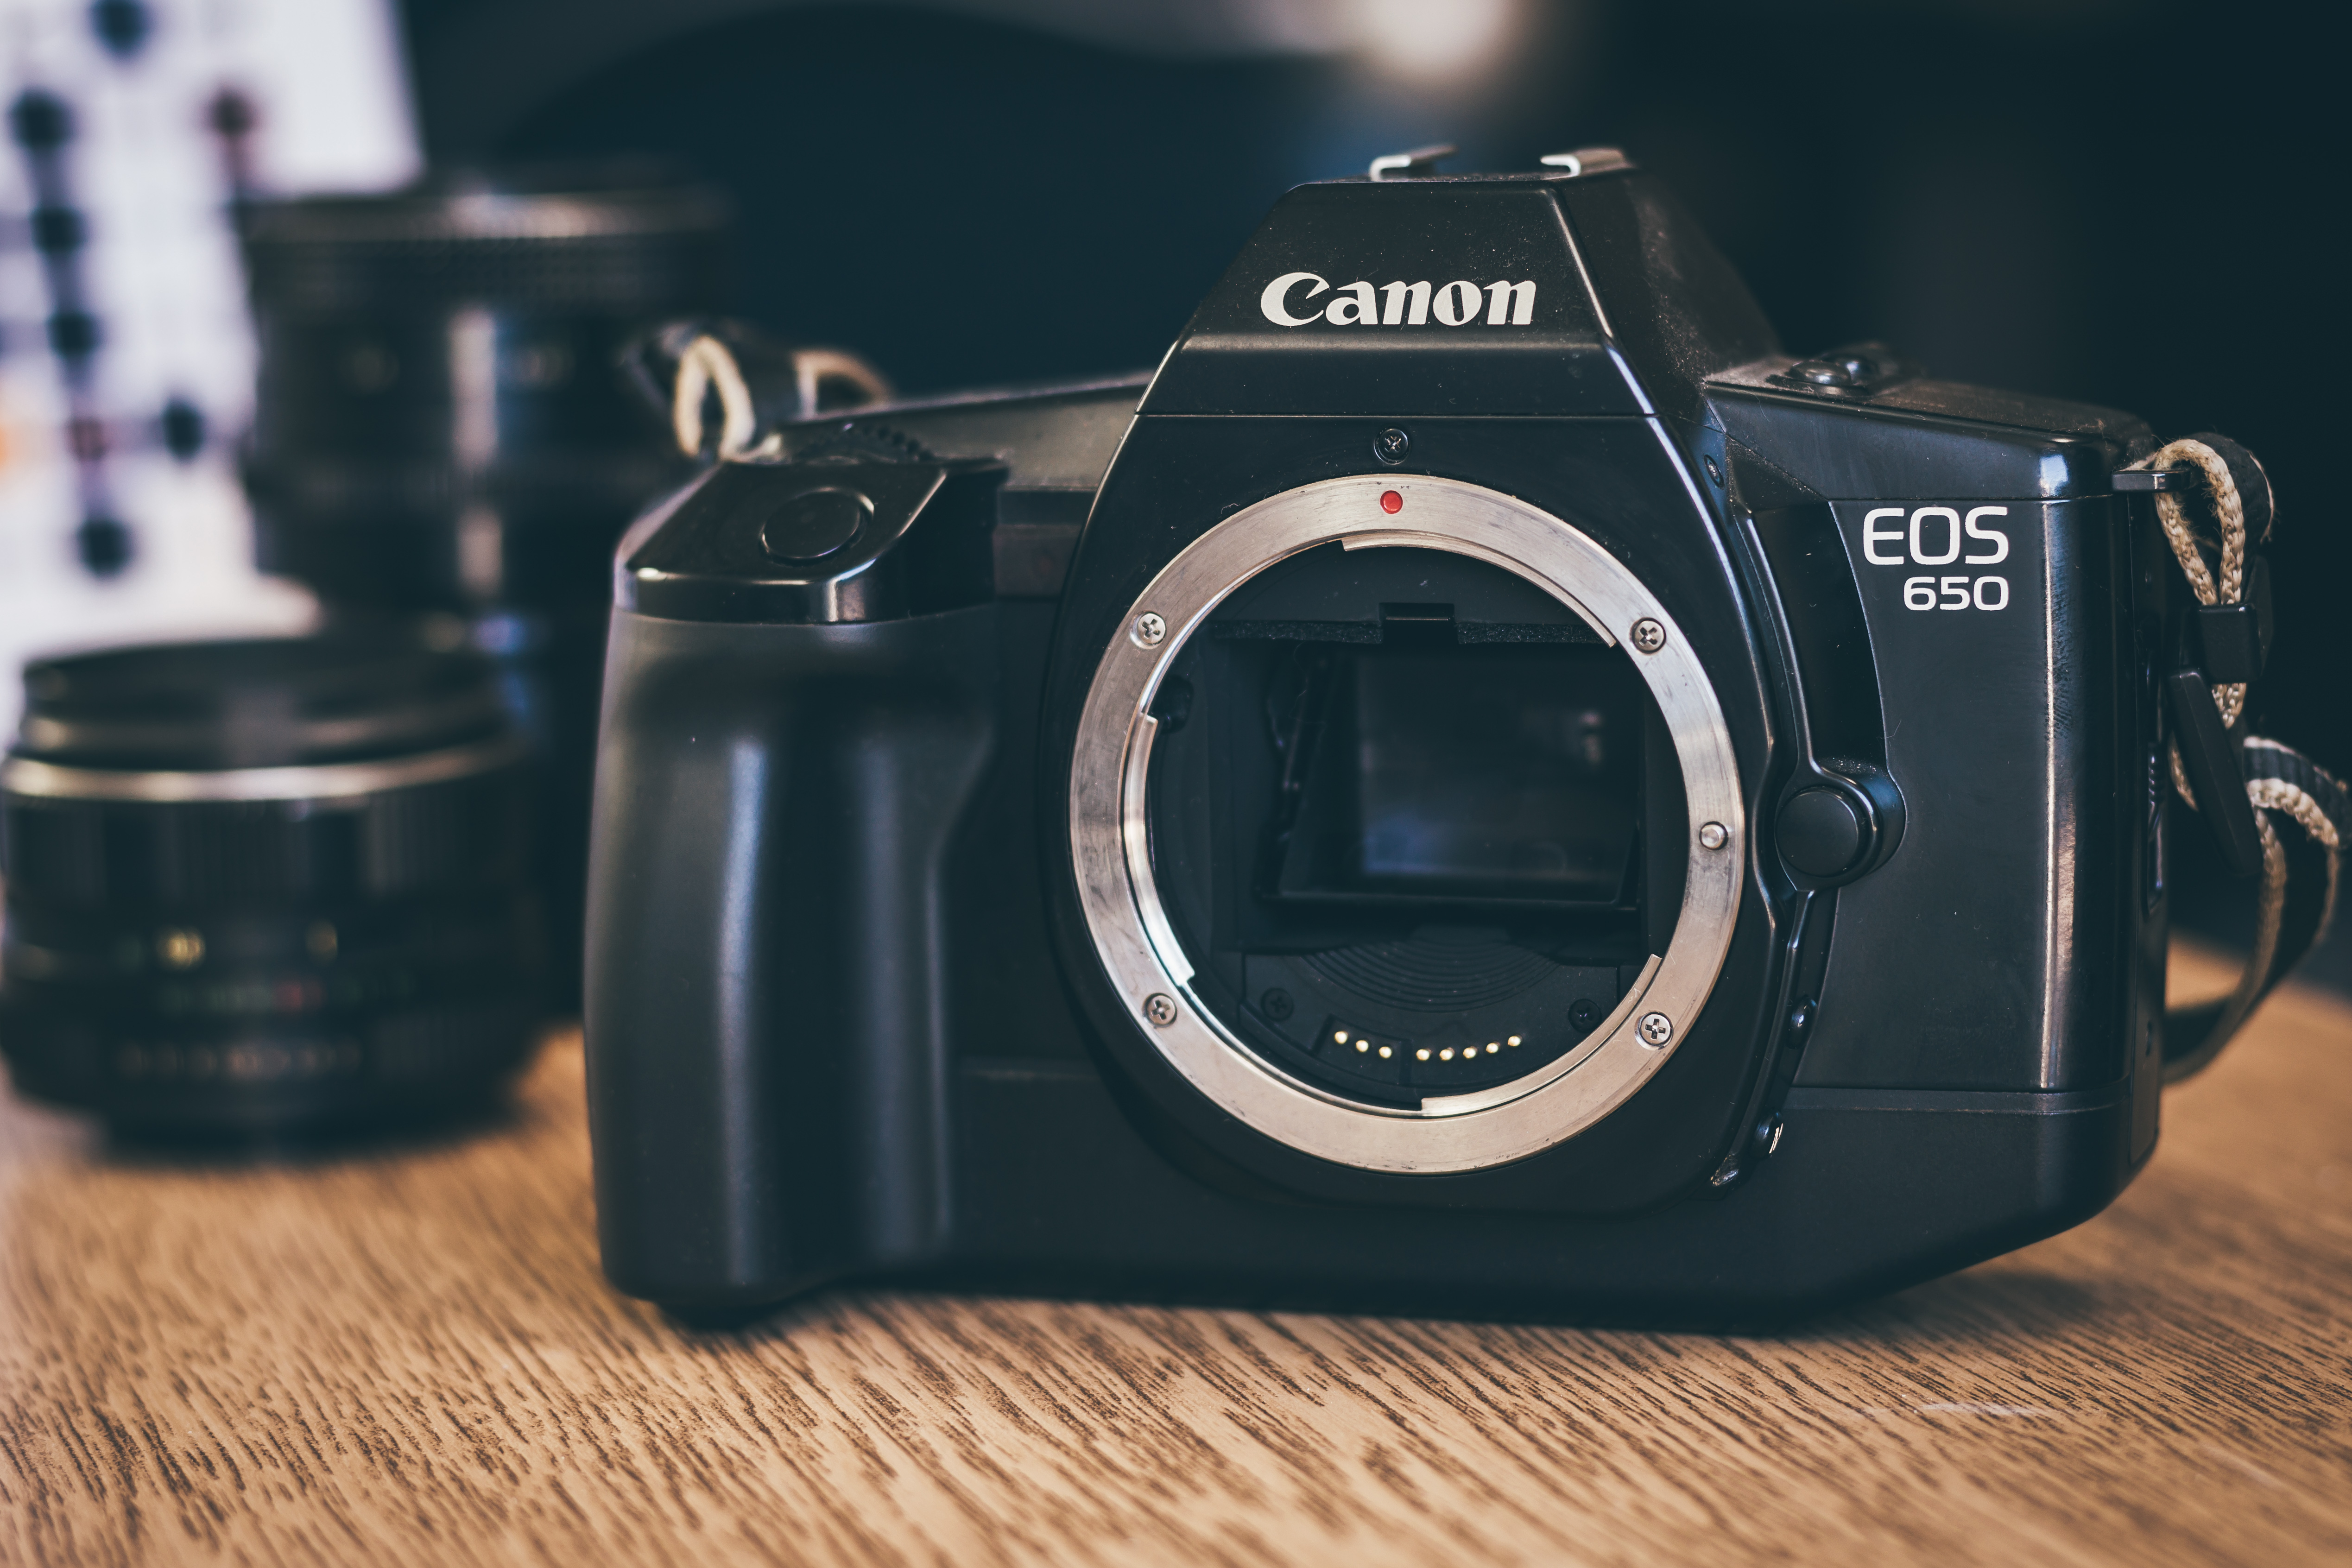 Et gammelt Canon EOS 650 kamera på et træbord